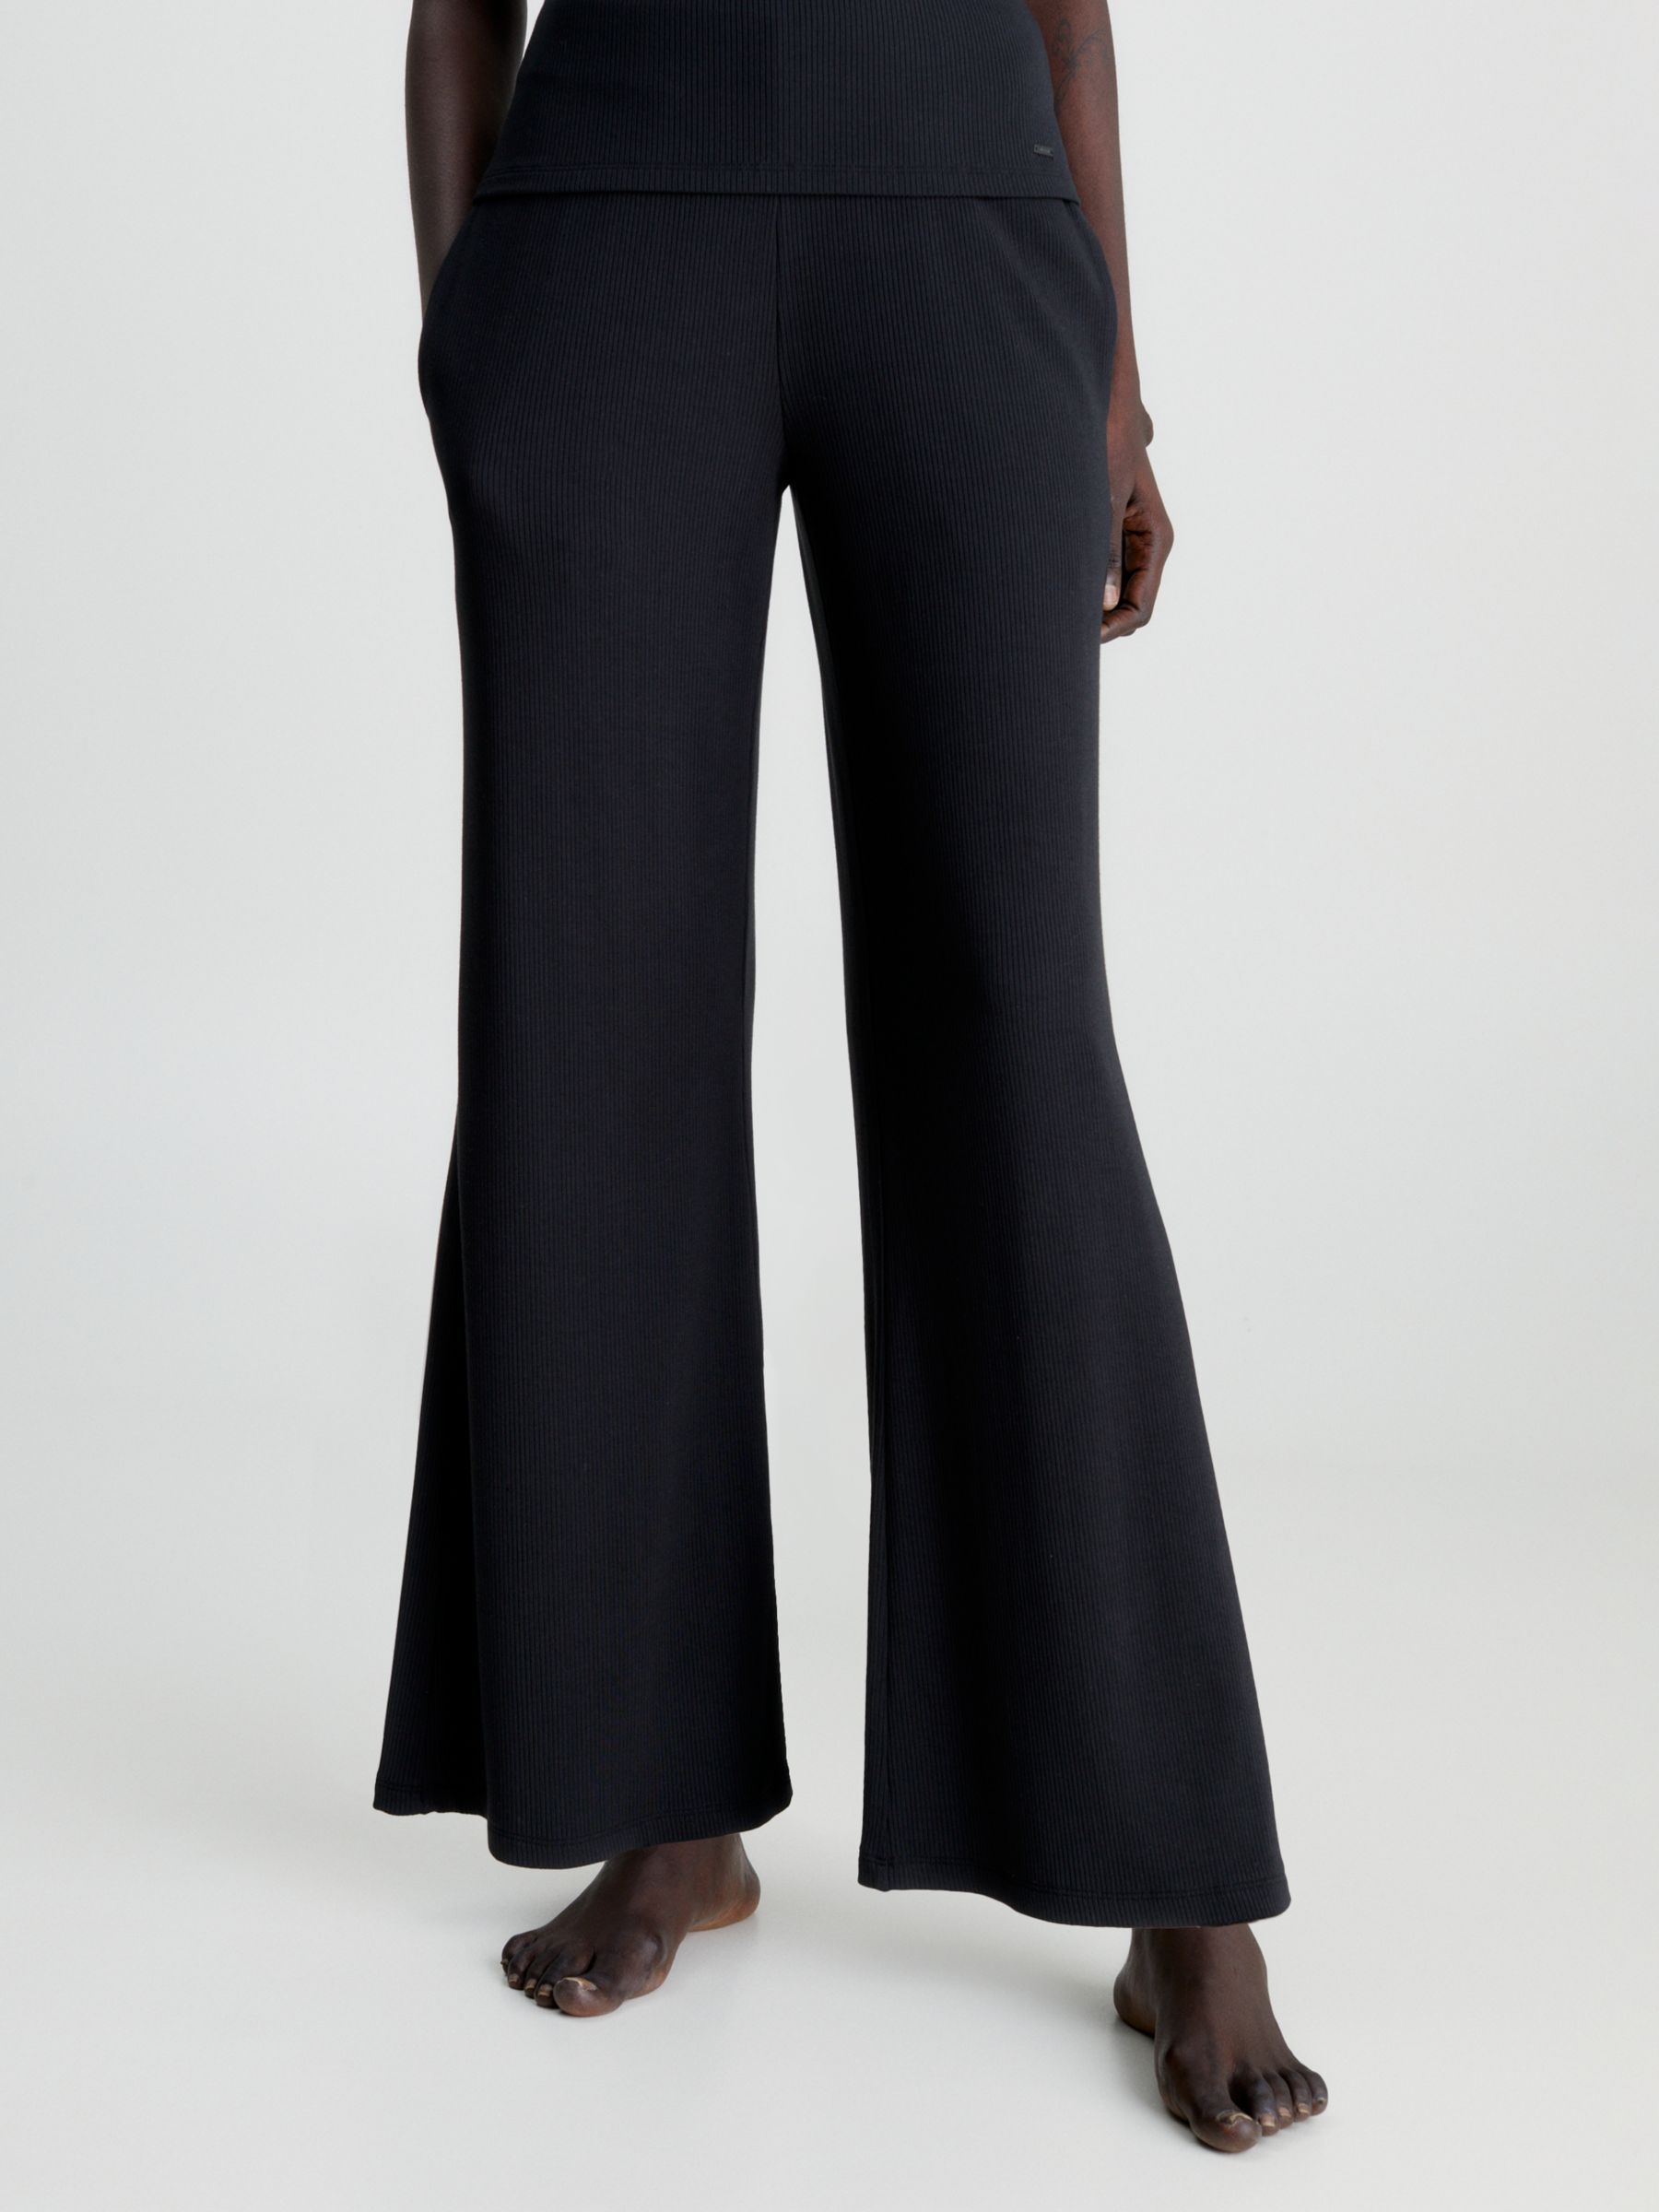 Calvin Klein Sophisticated Lounge Pants, Black, XS